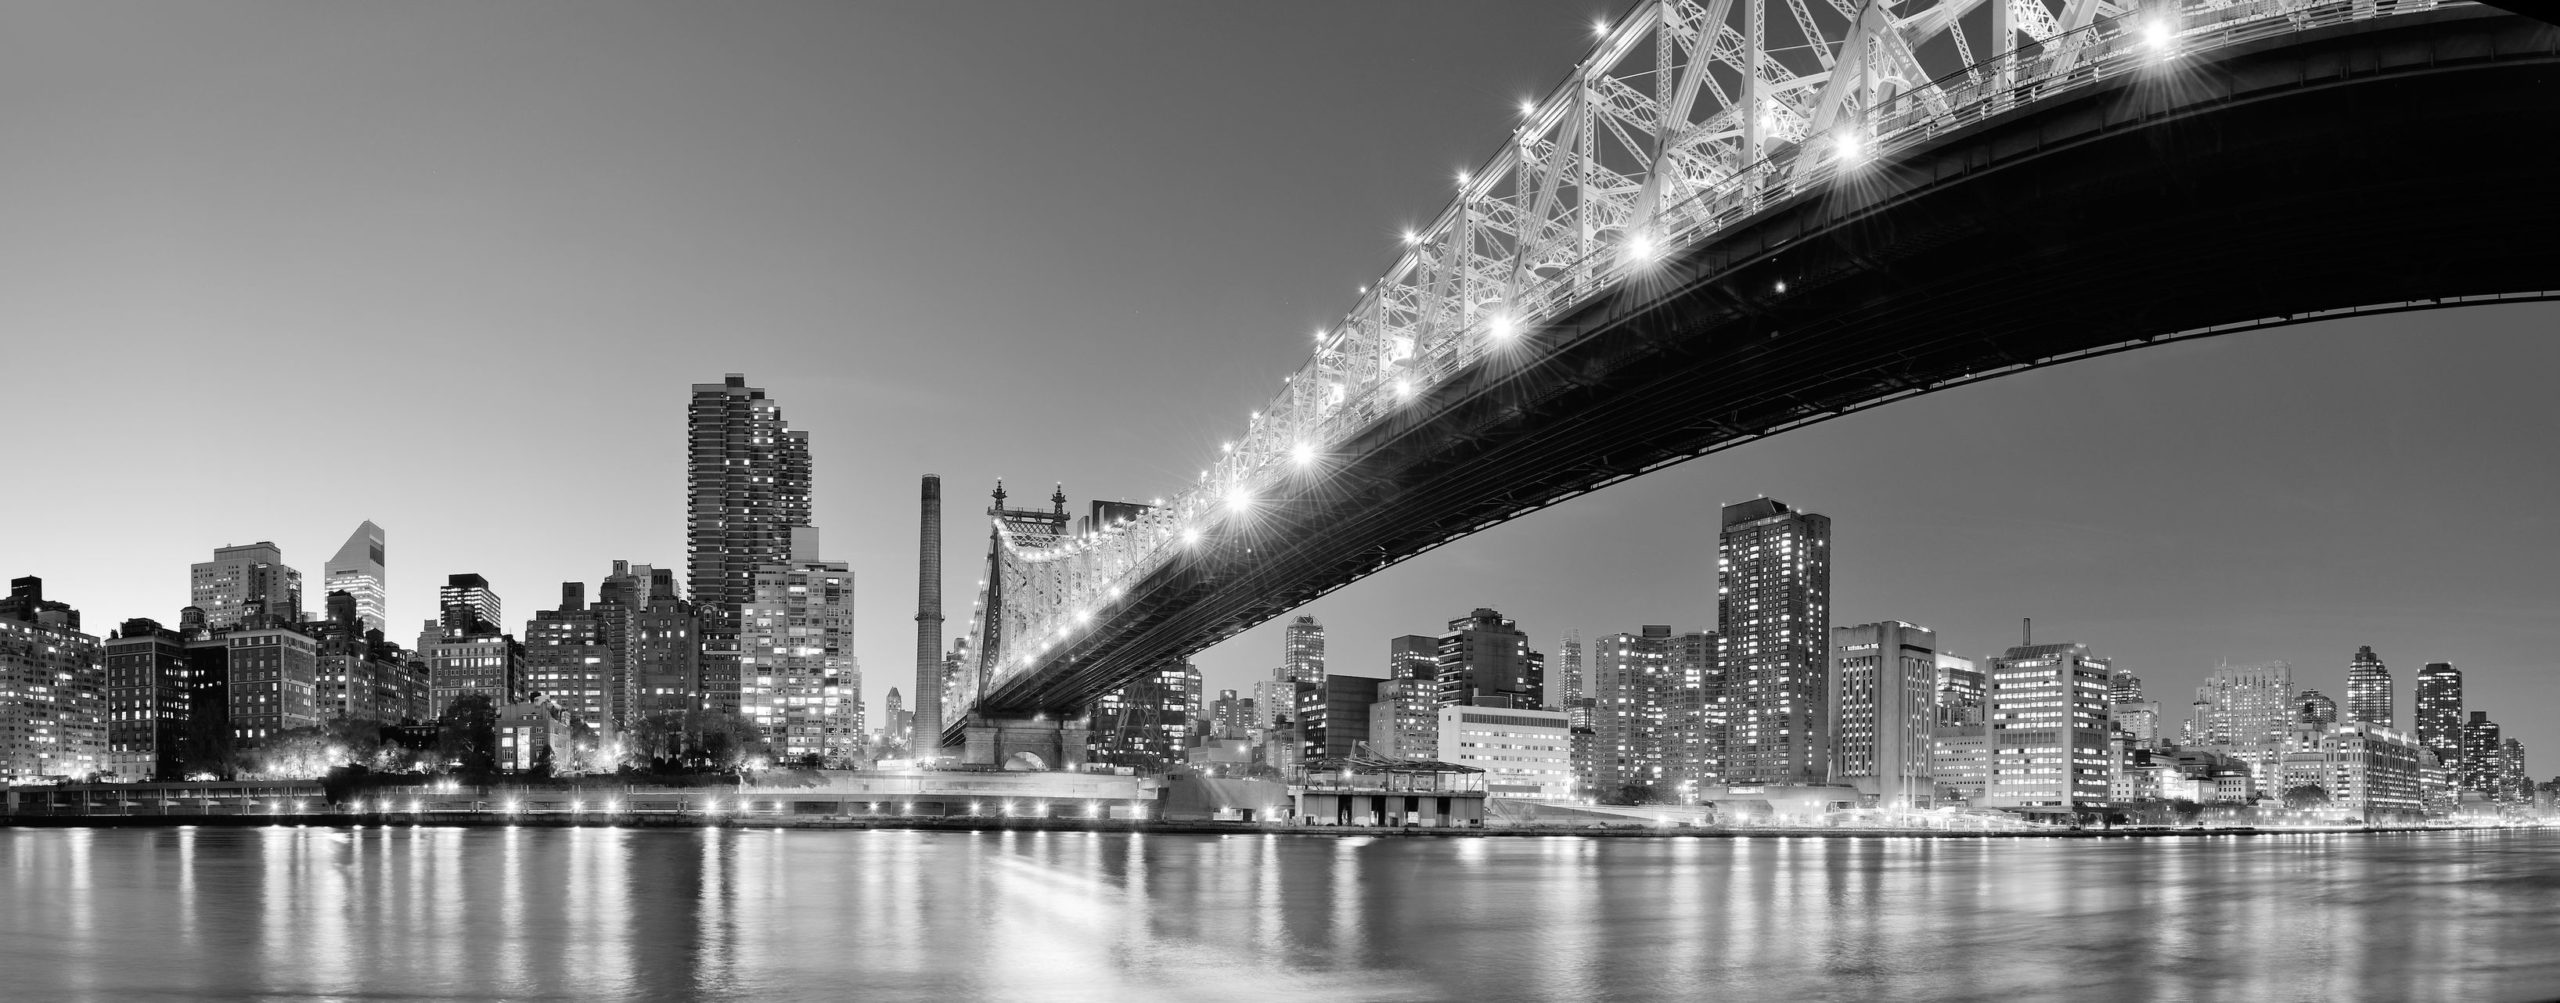 black and white New York City scene with bridge over river